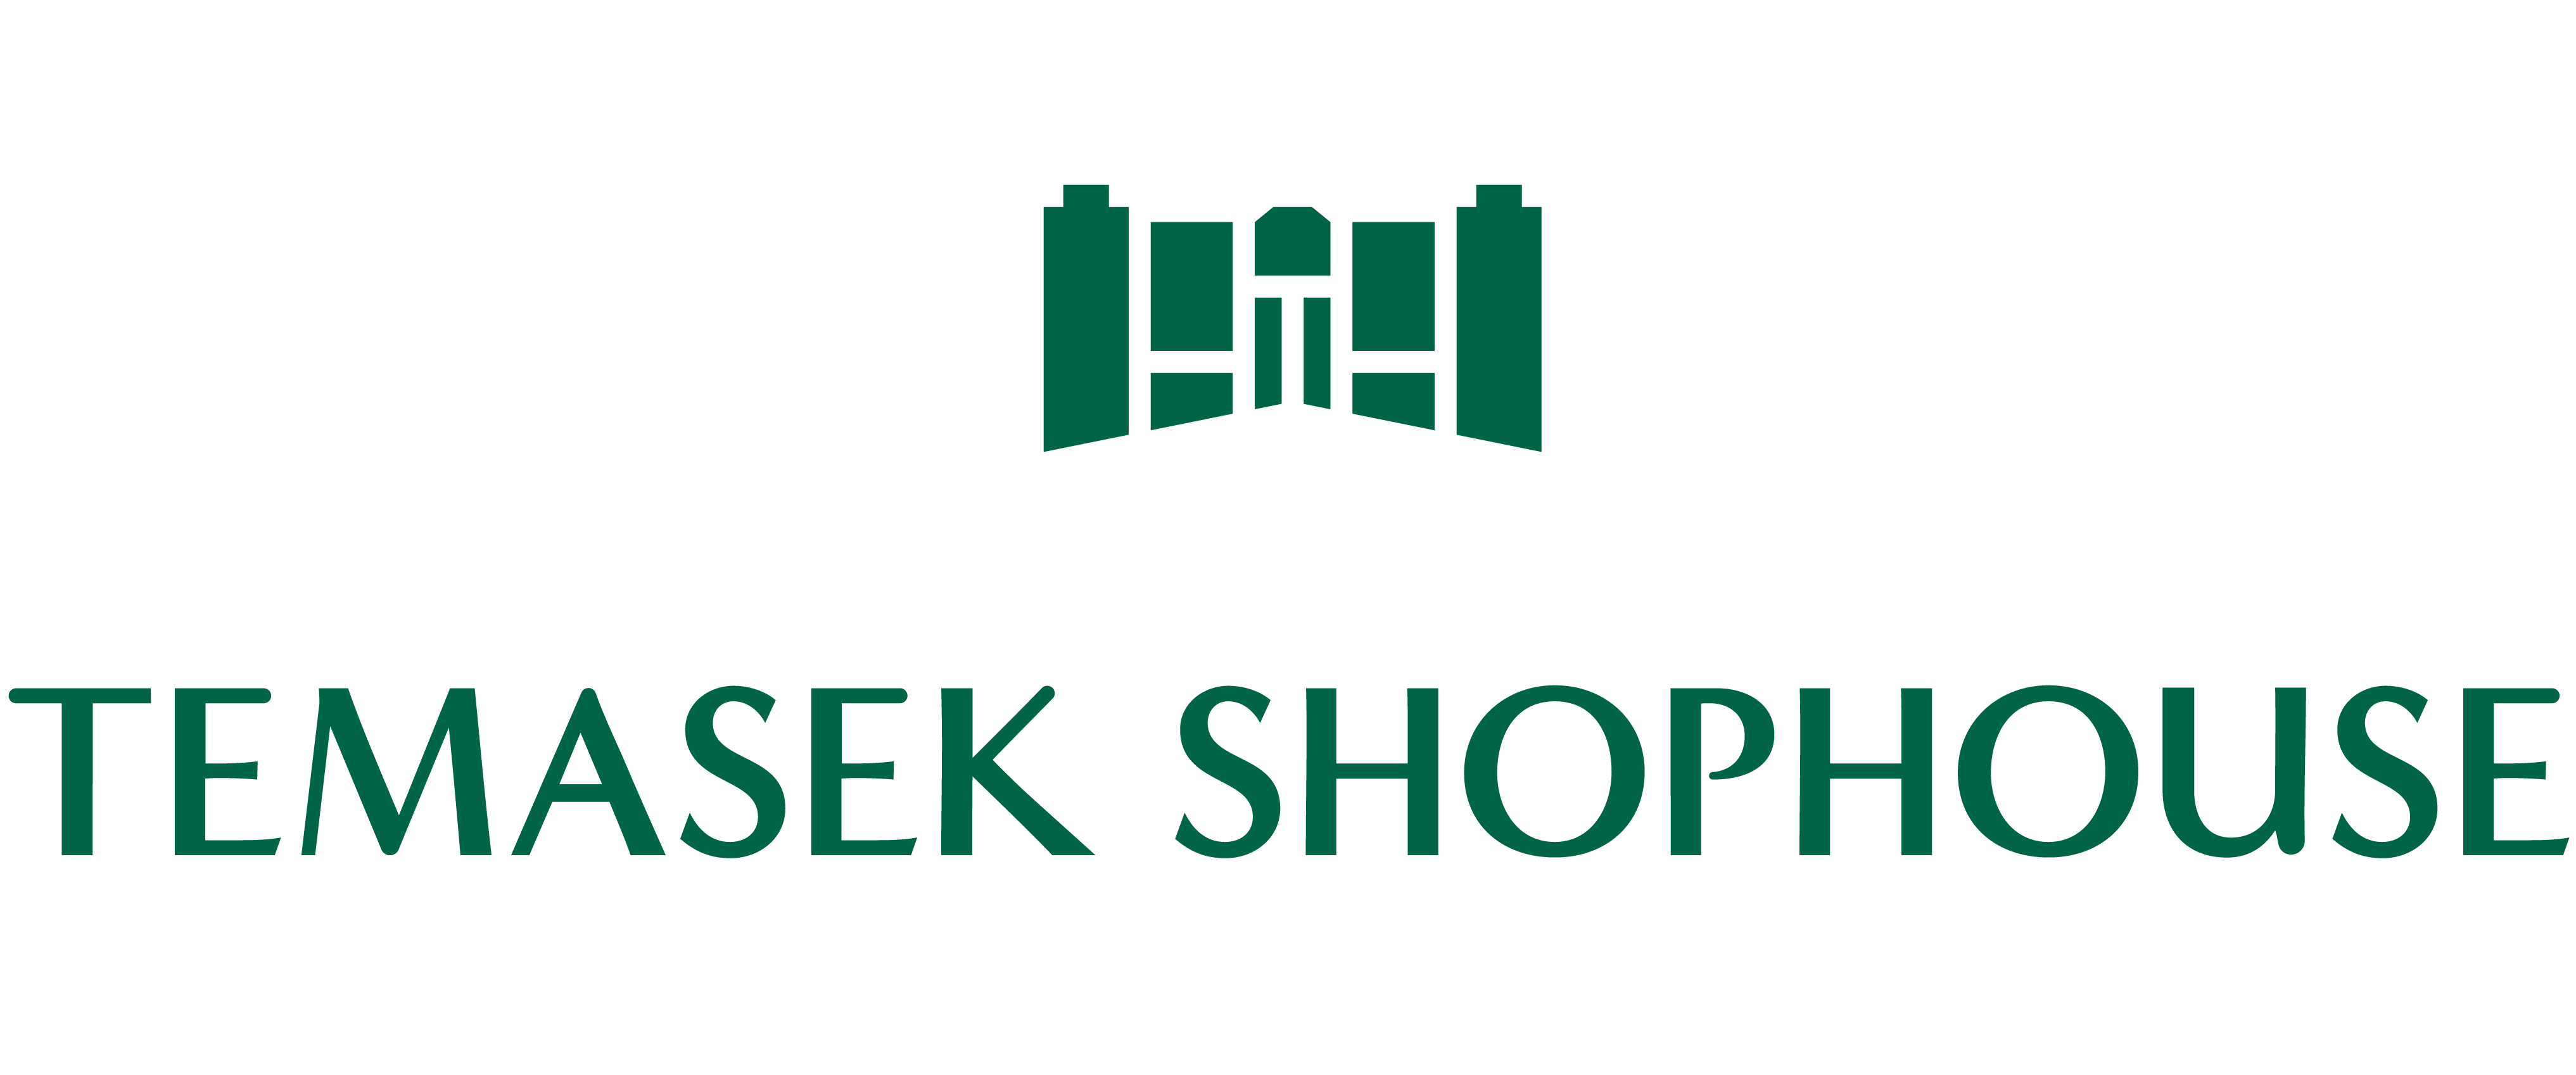 Temasek Shophouse